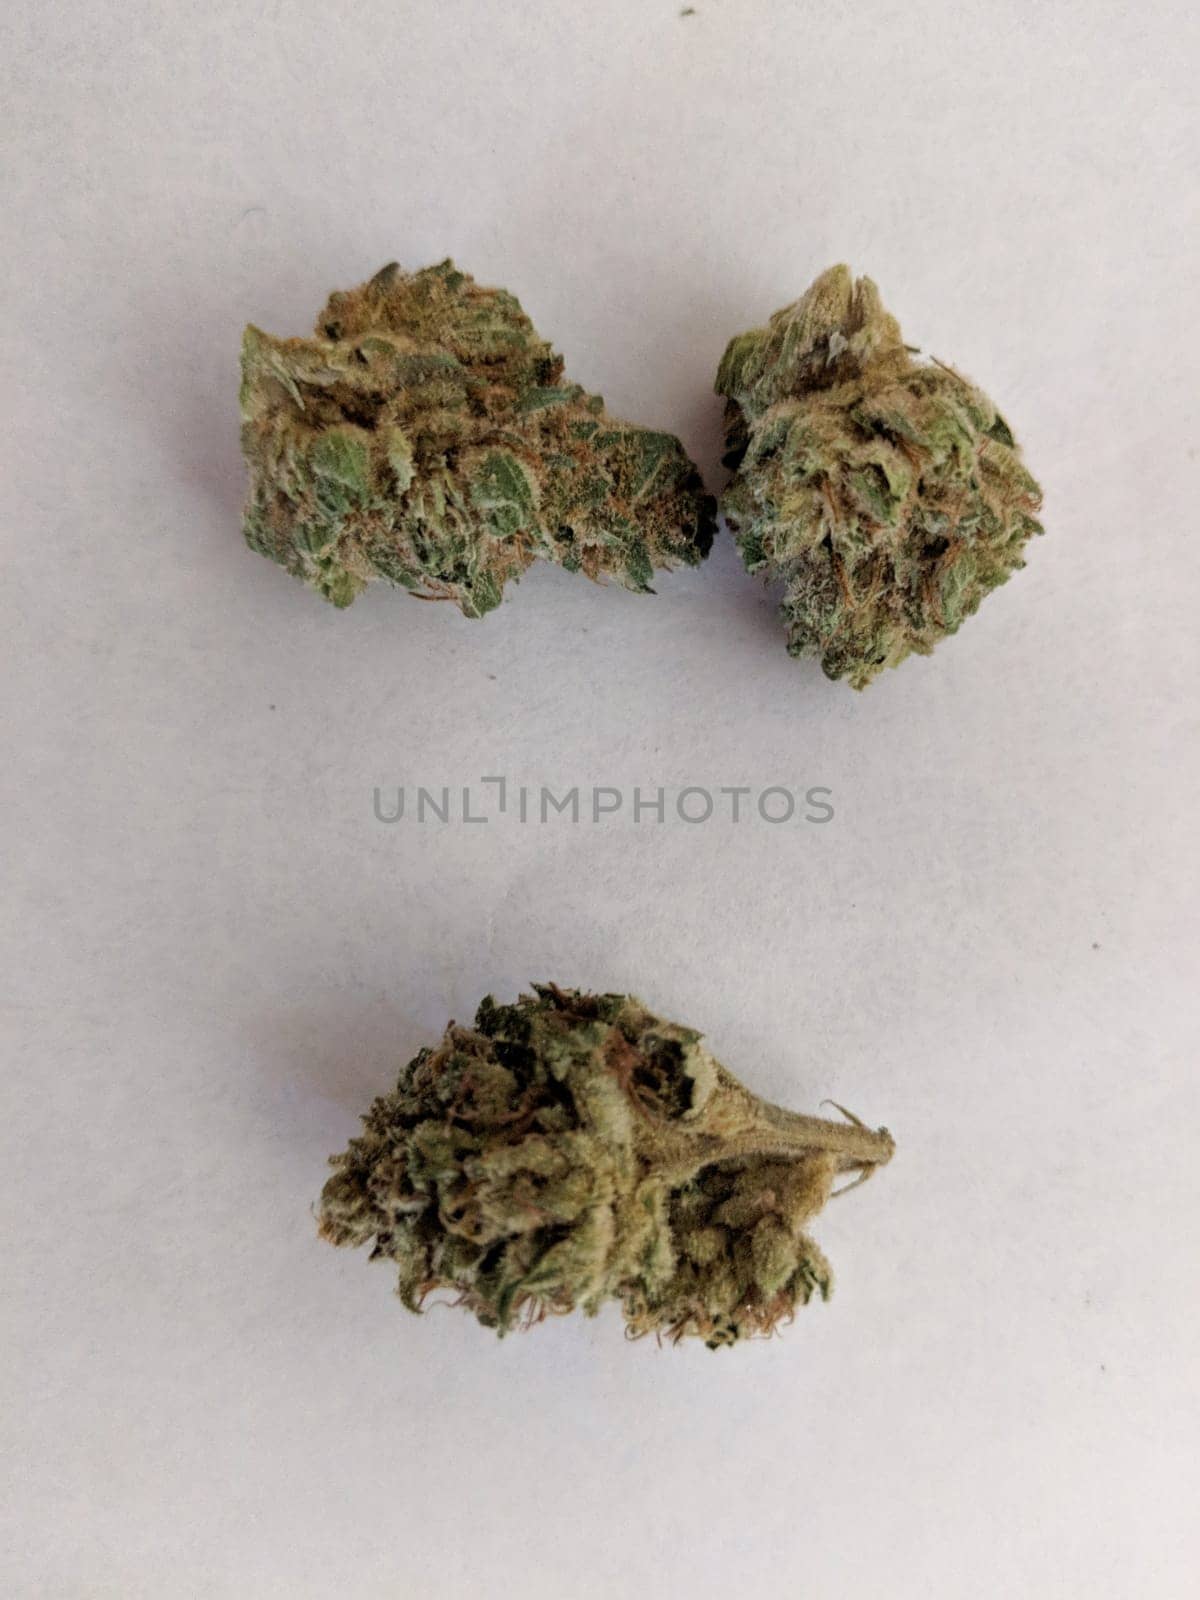 Three cannabis buds on a plain background